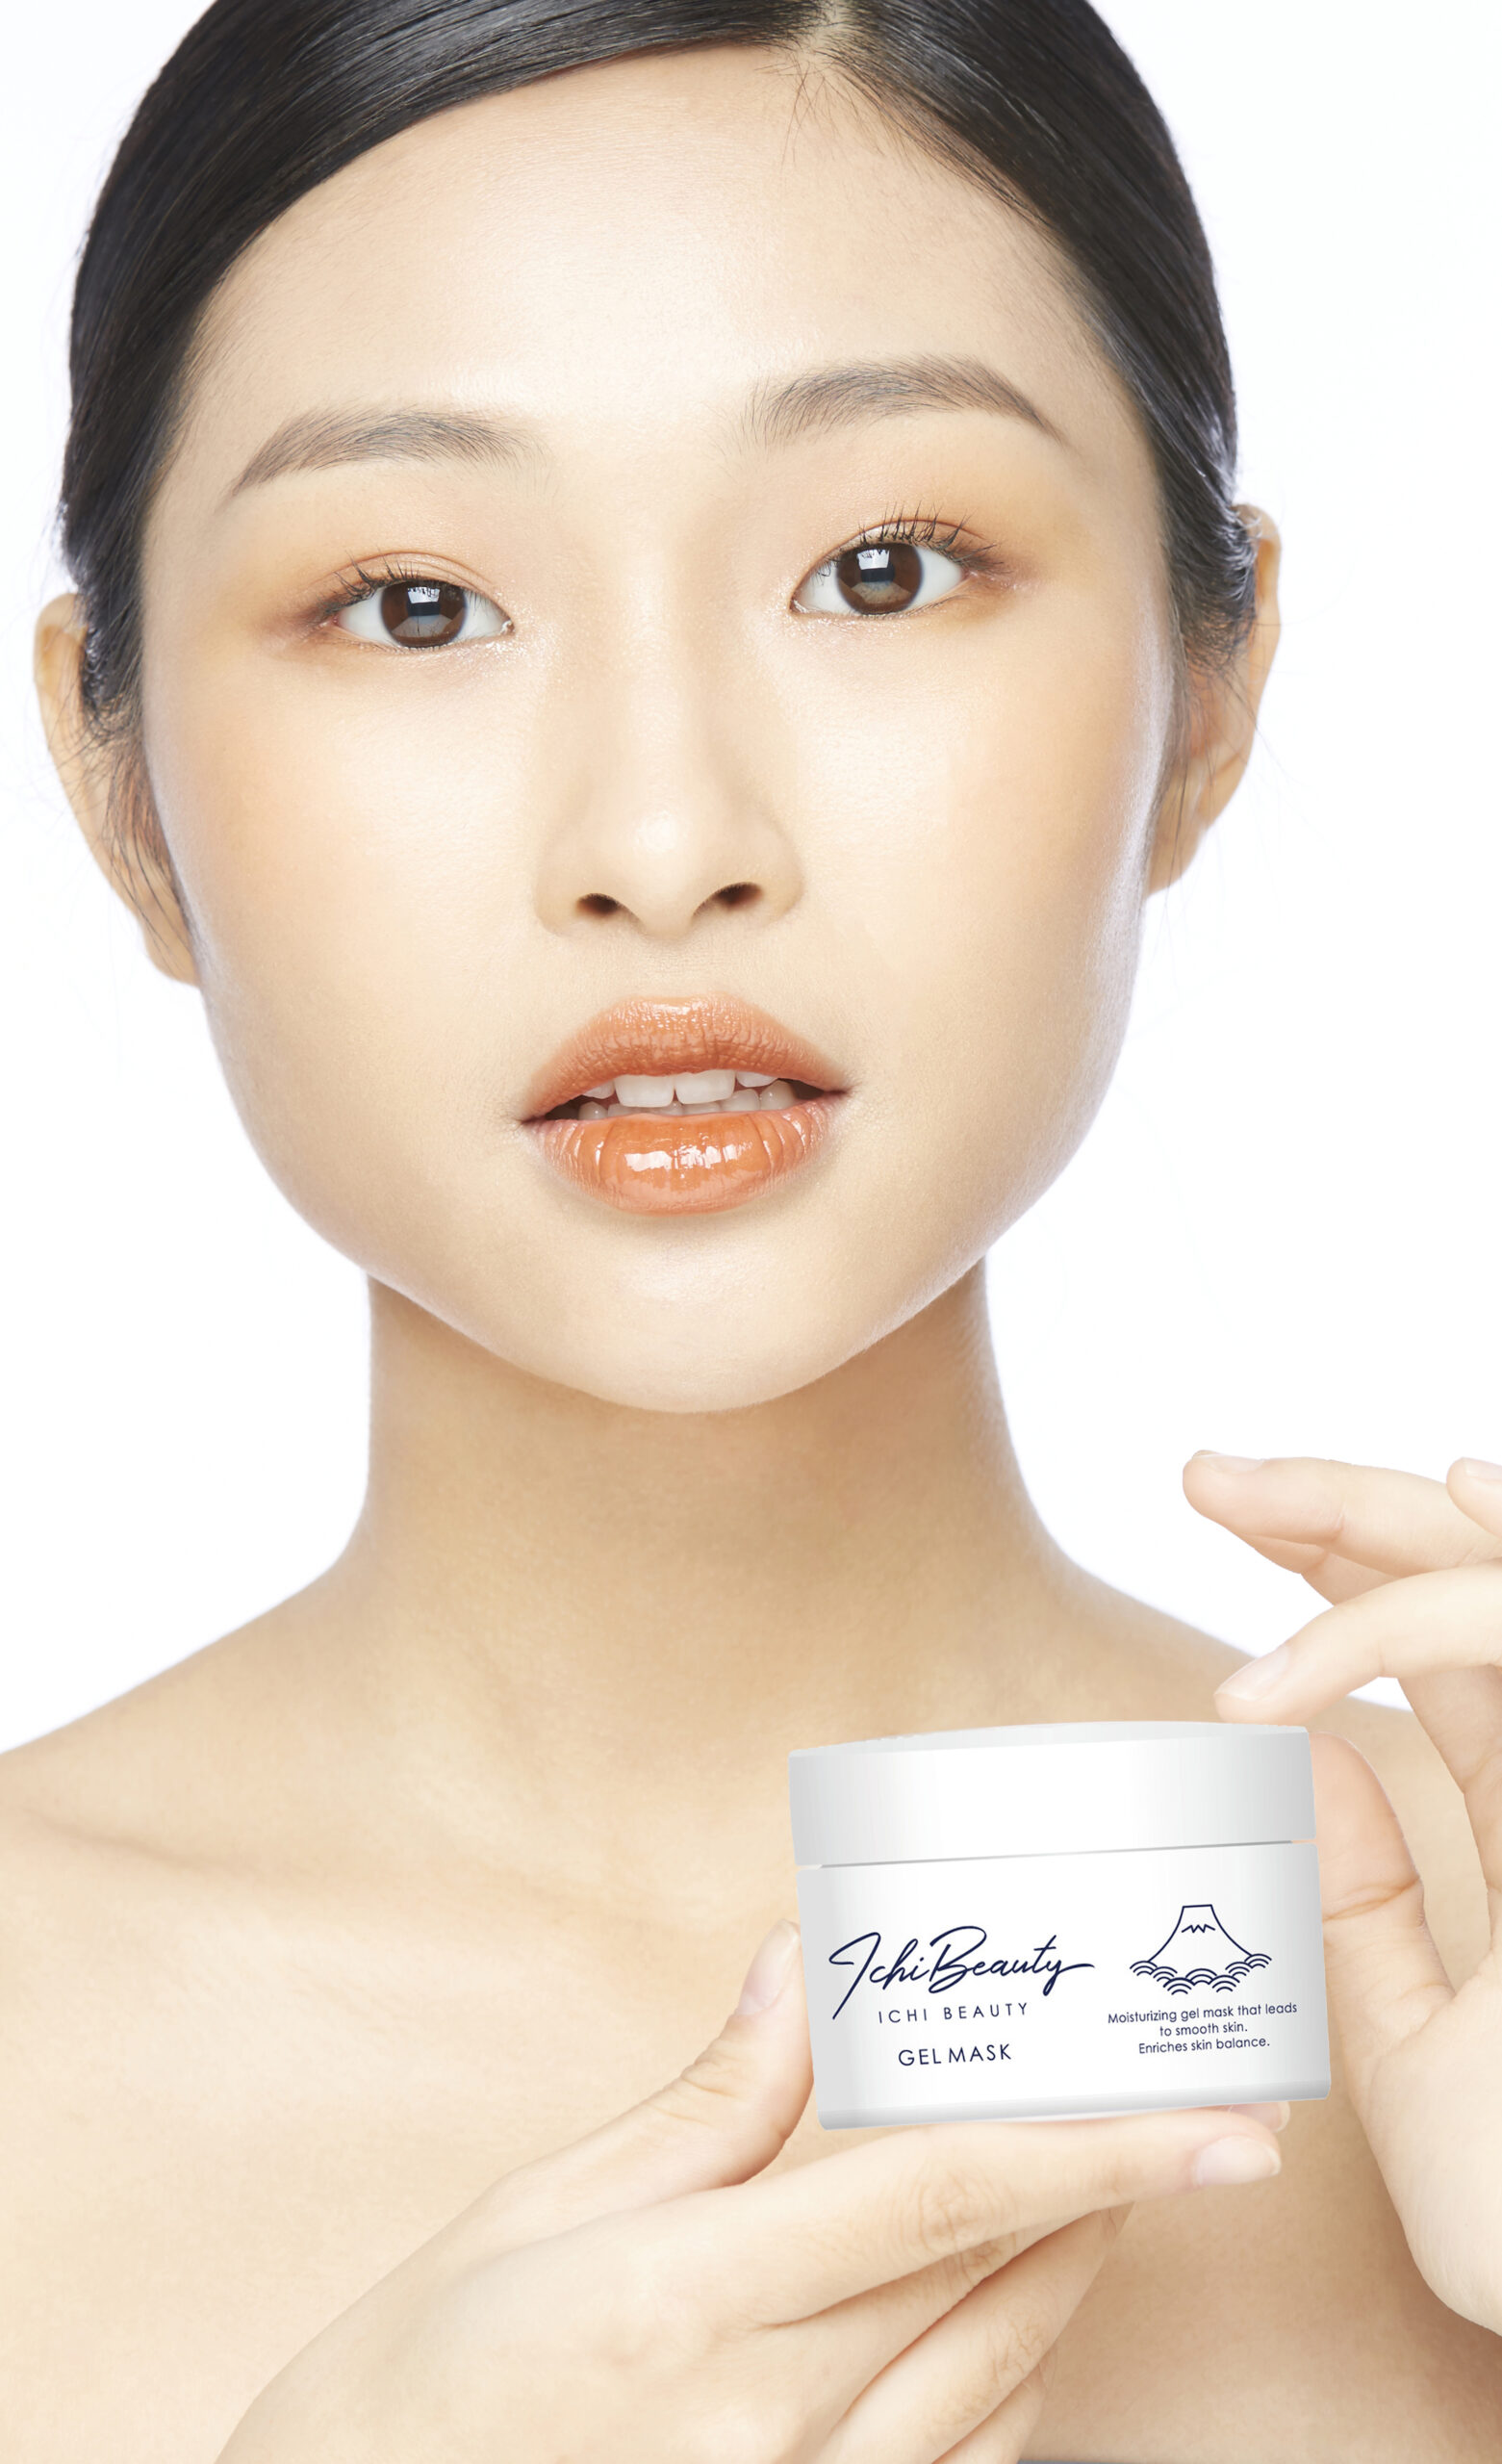 Ichi Beauty Cosmetics Brand from Japan